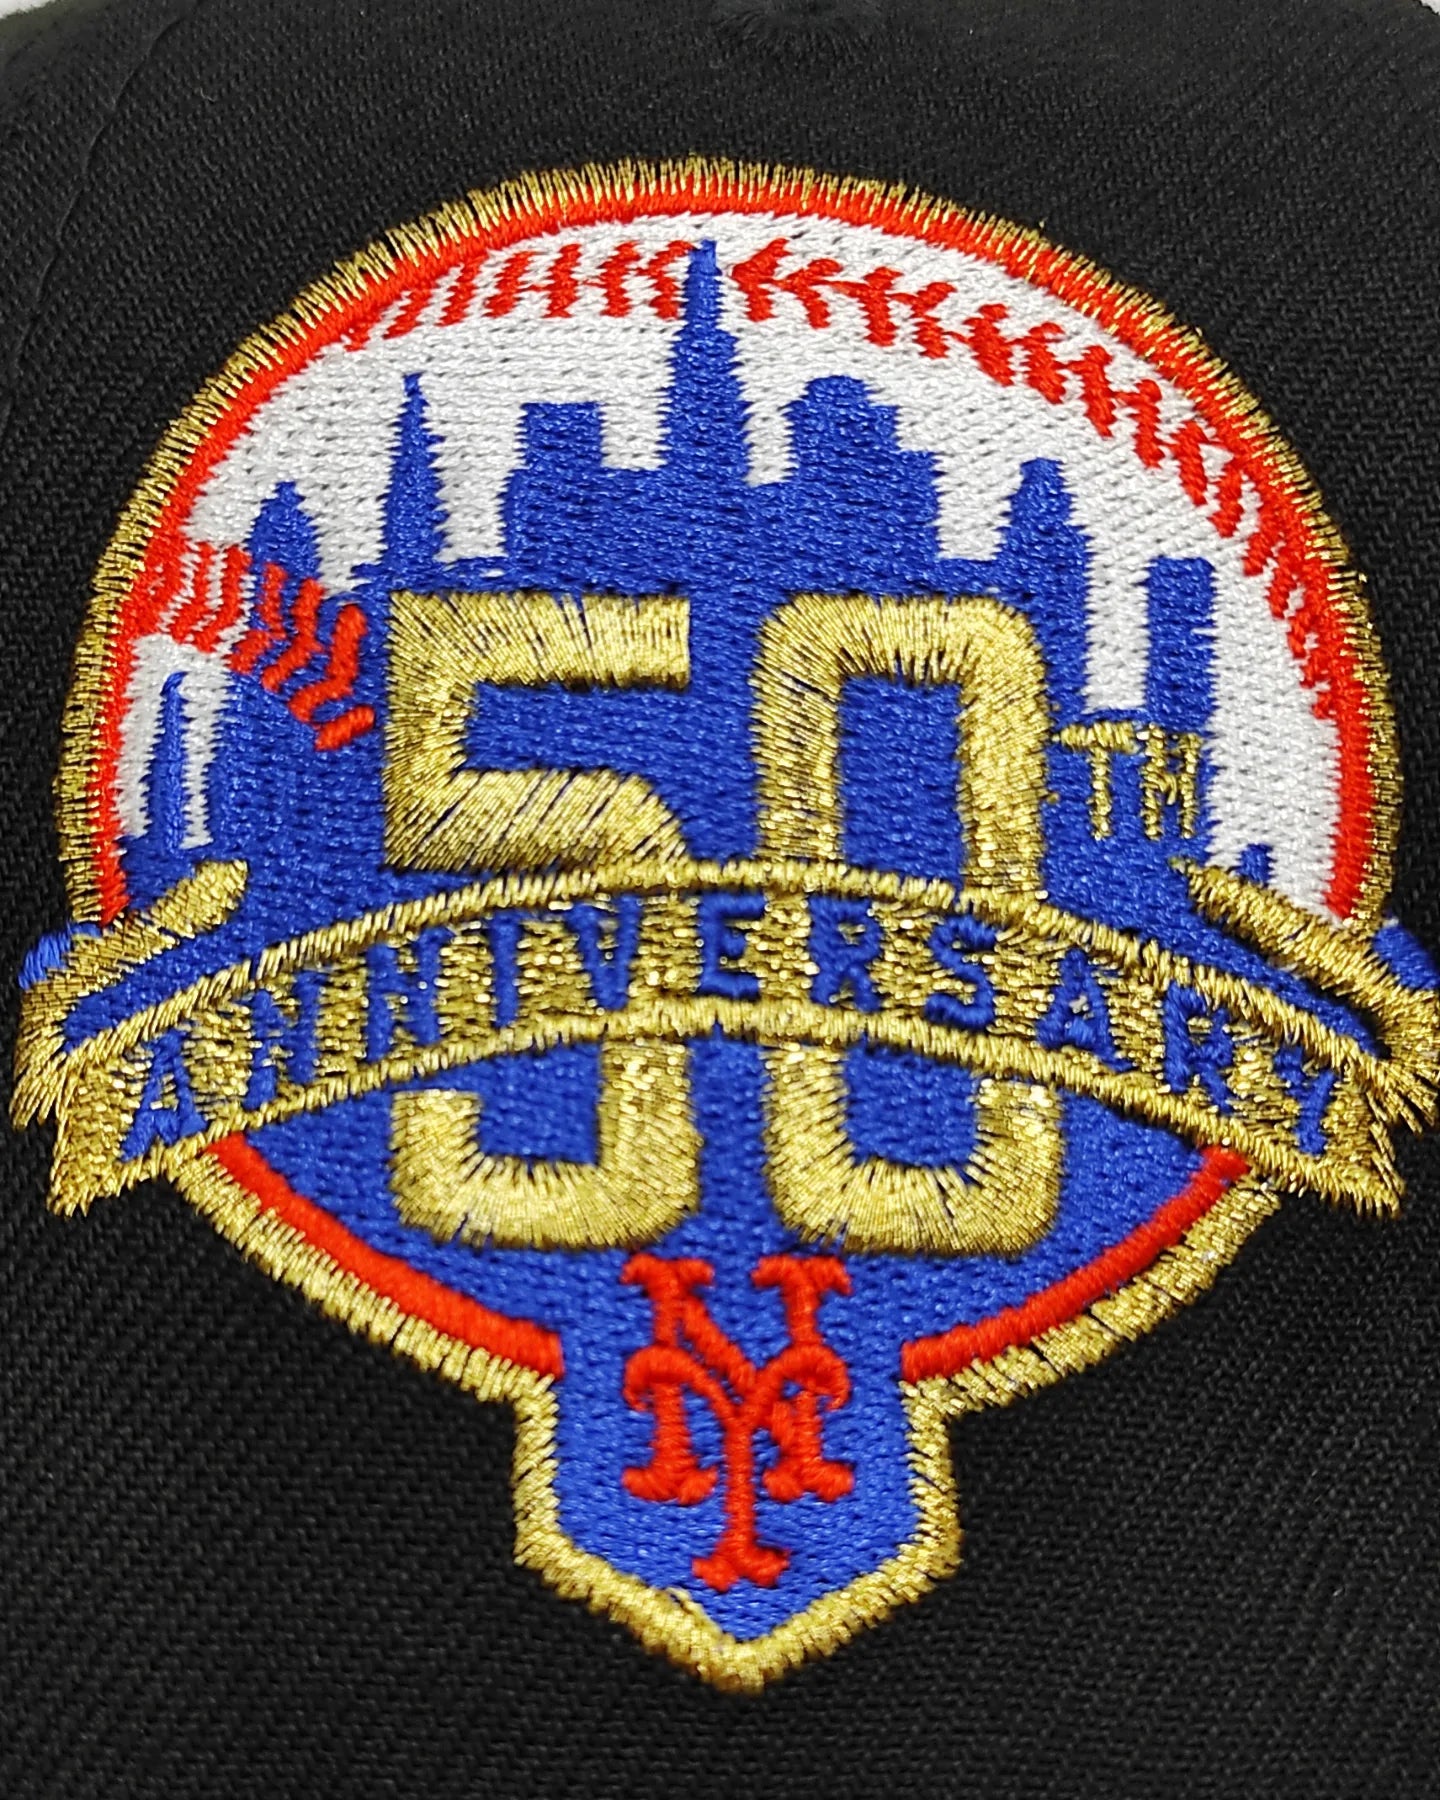 New Era New York Mets 50th aniversario black edition 59fifty